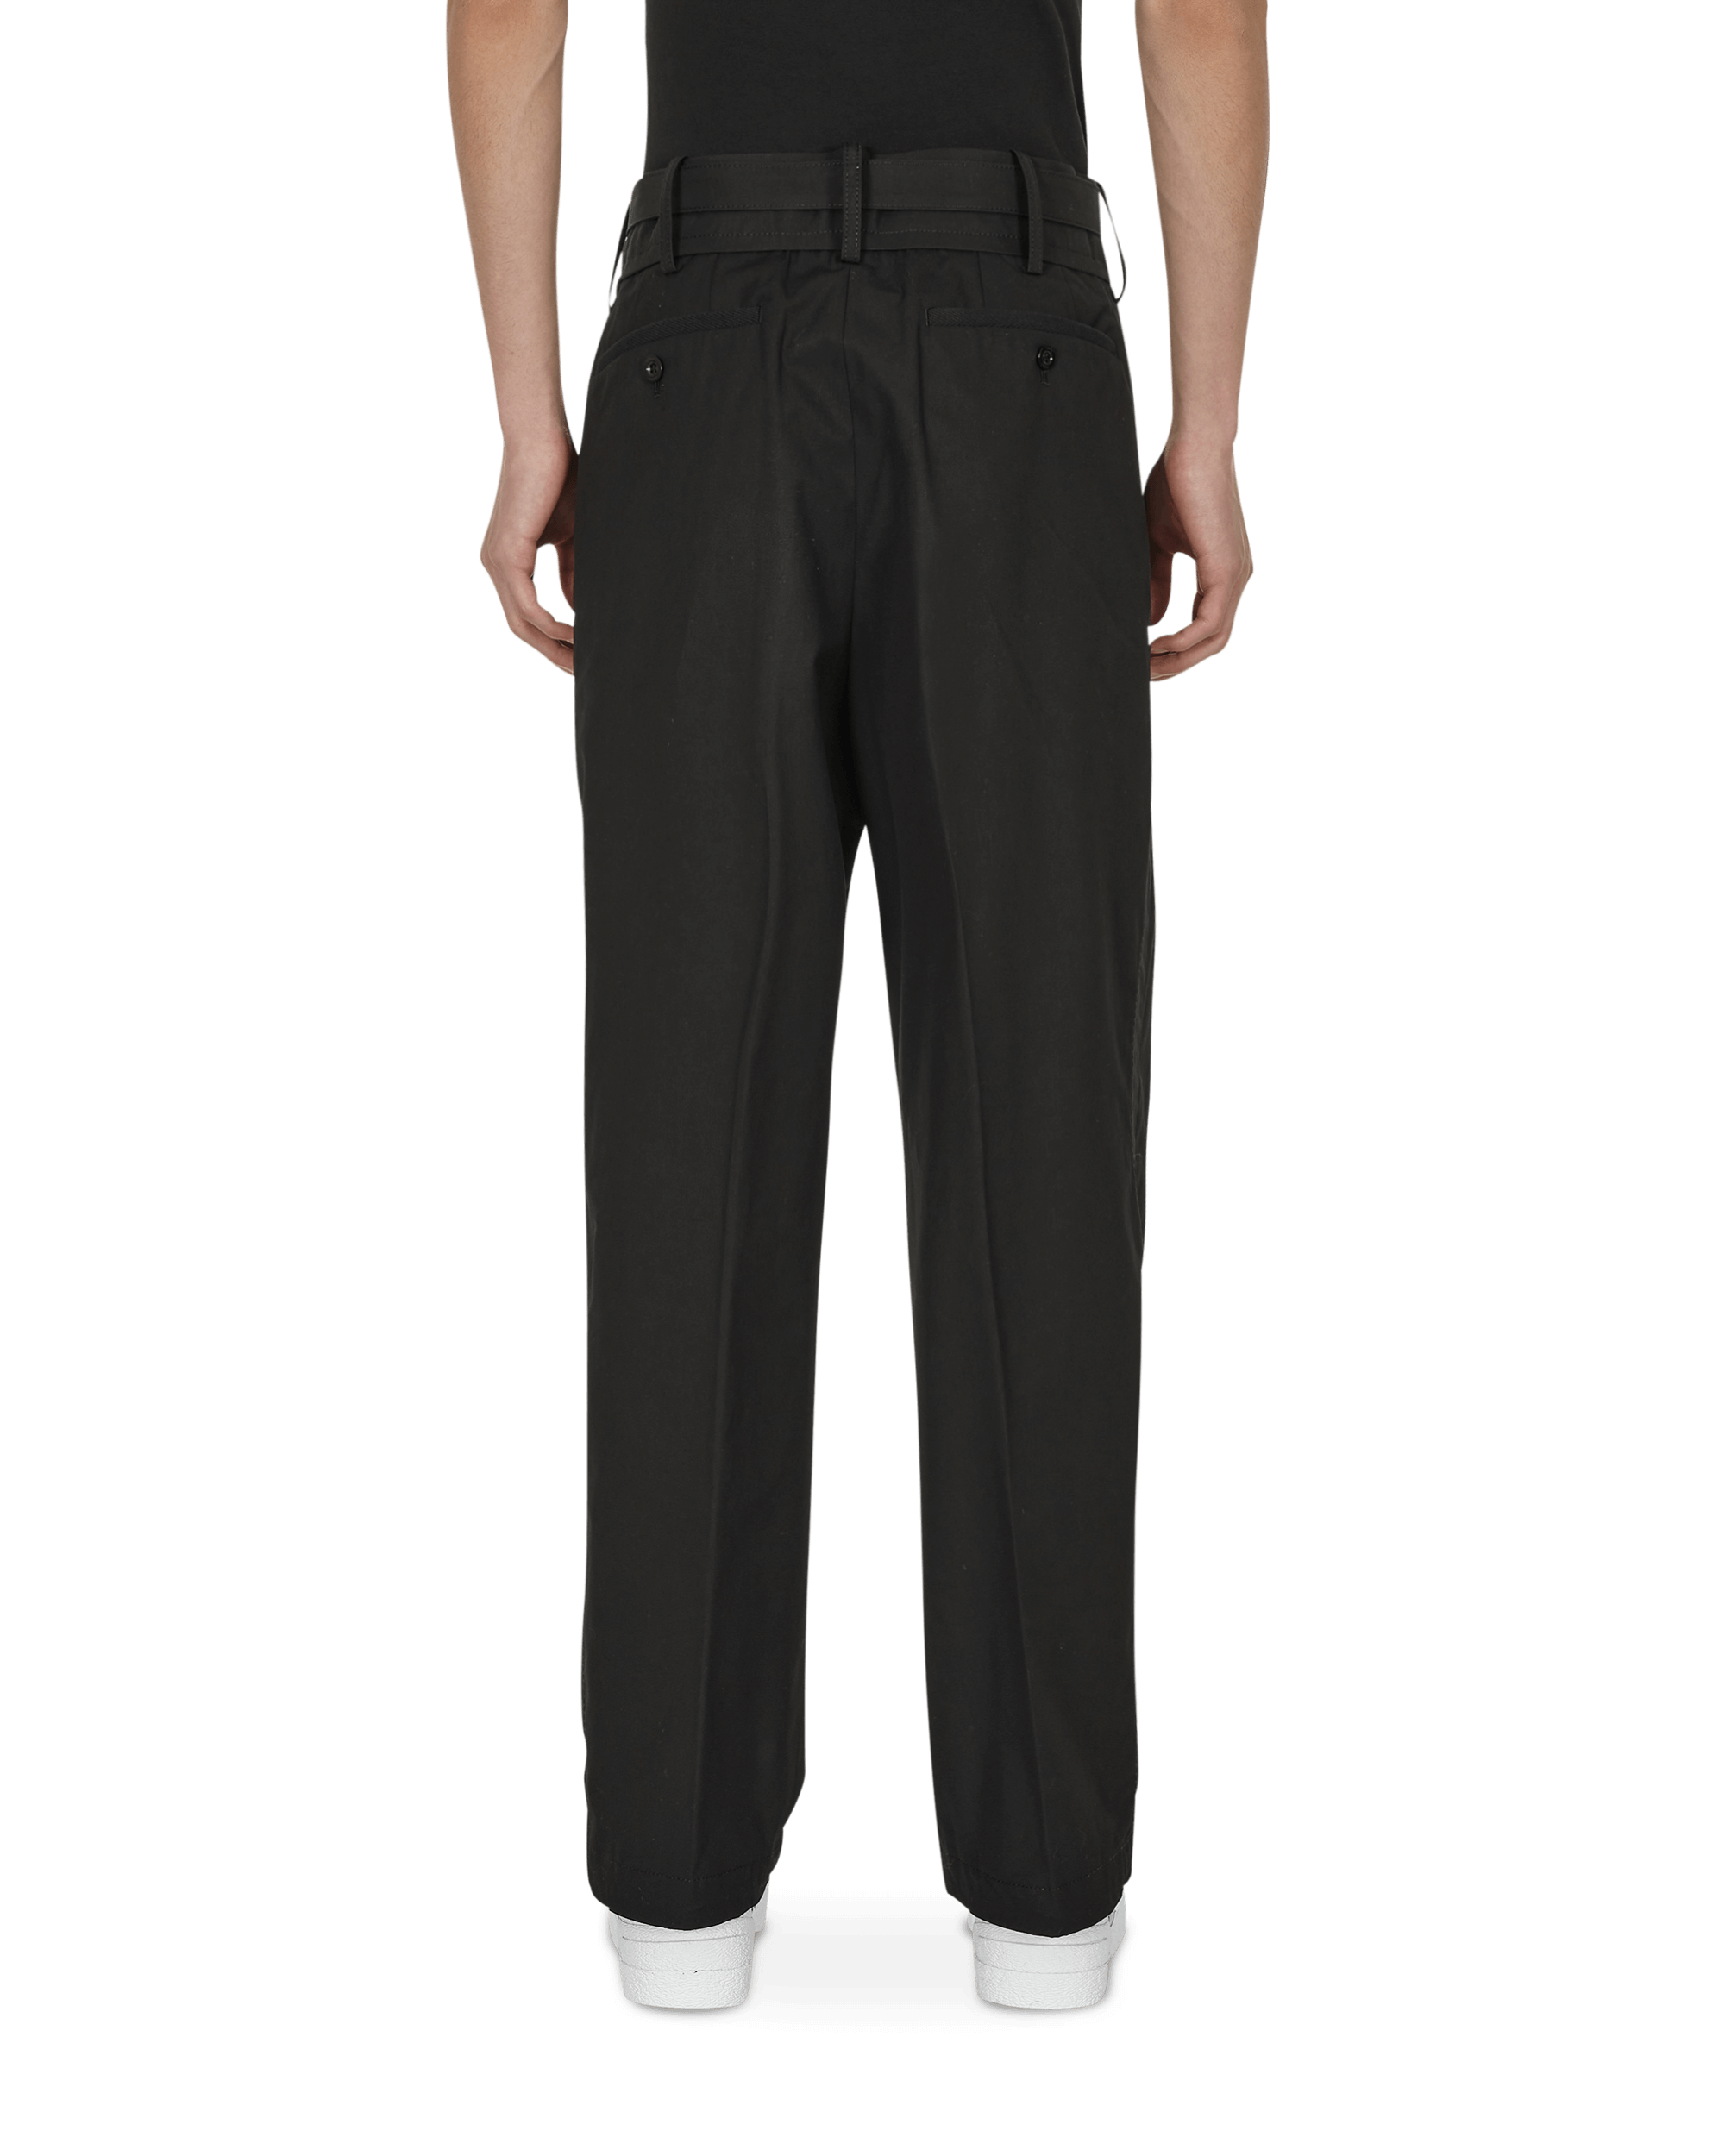 Sacai Cotton Weather Mix Pants Black Pants Trousers 22-02680M 001